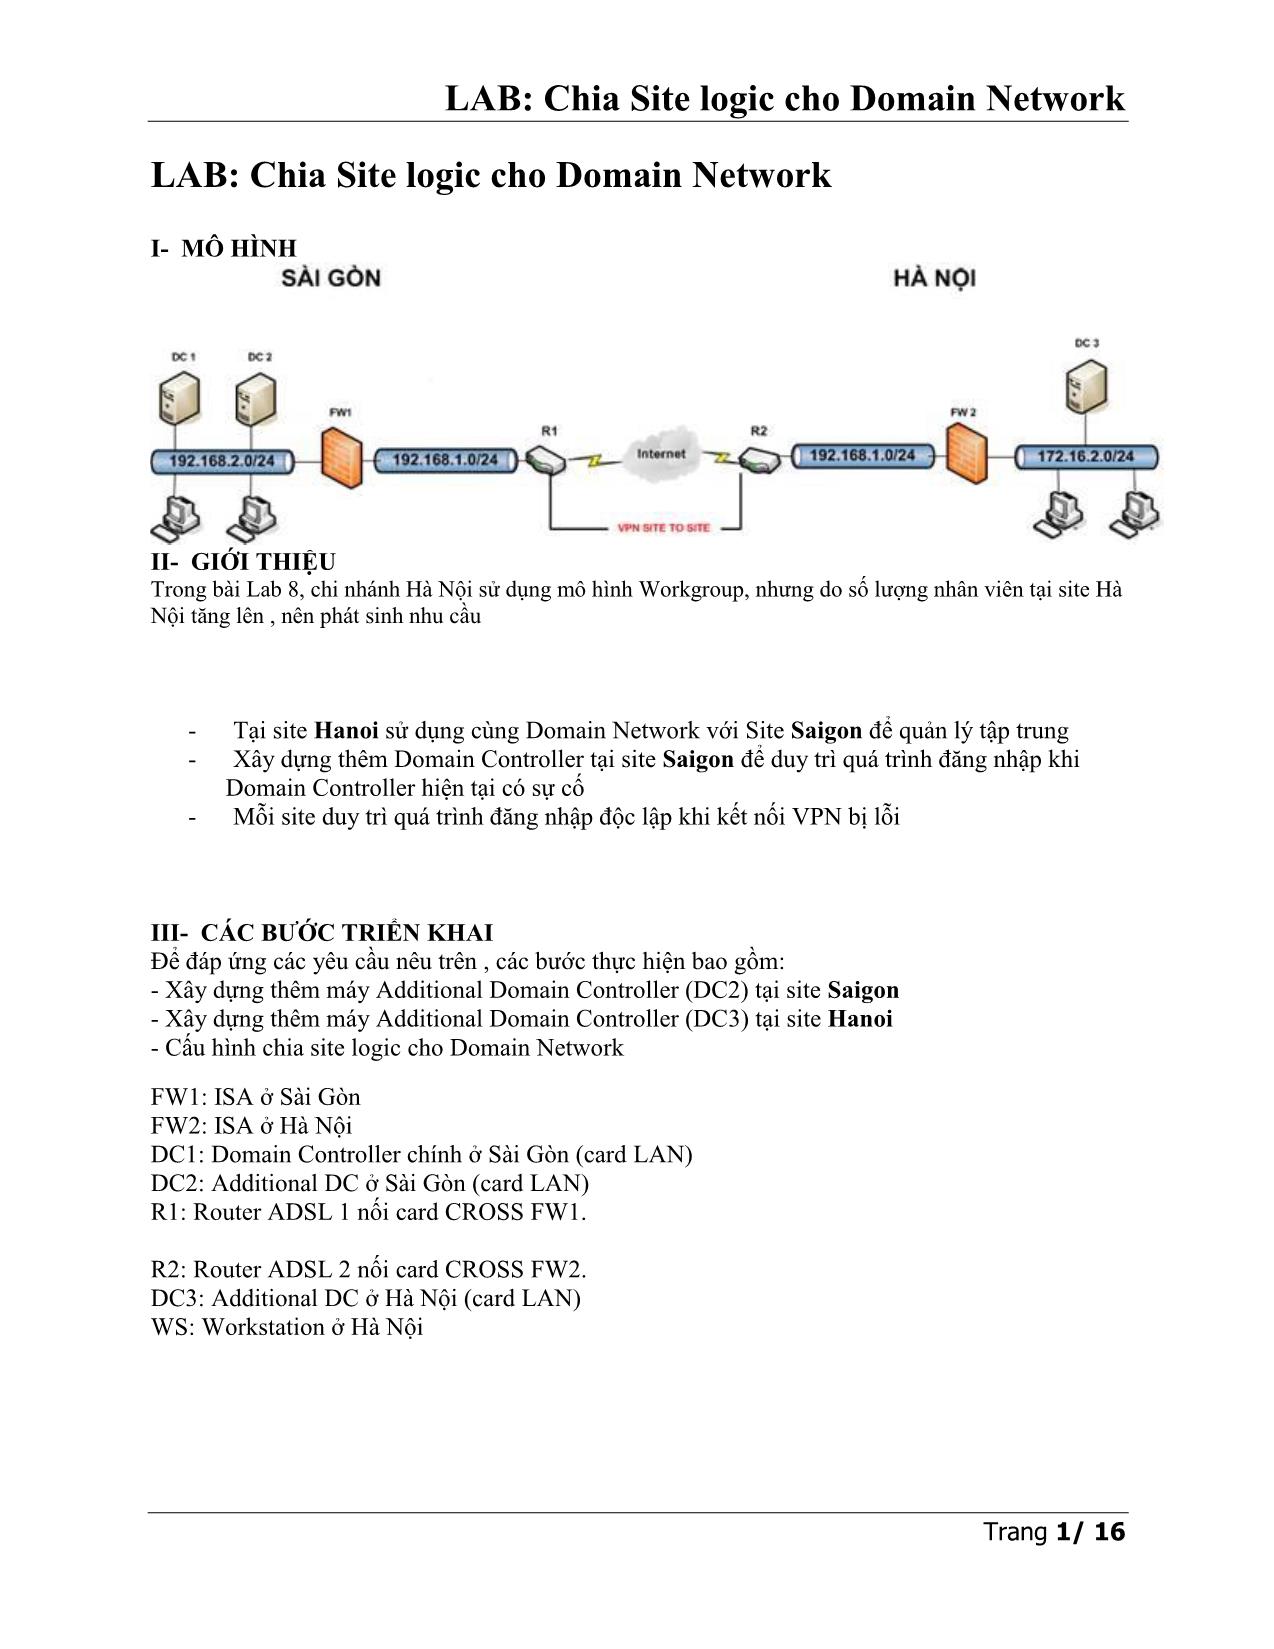 Chia Site logic cho Domain Network trang 1